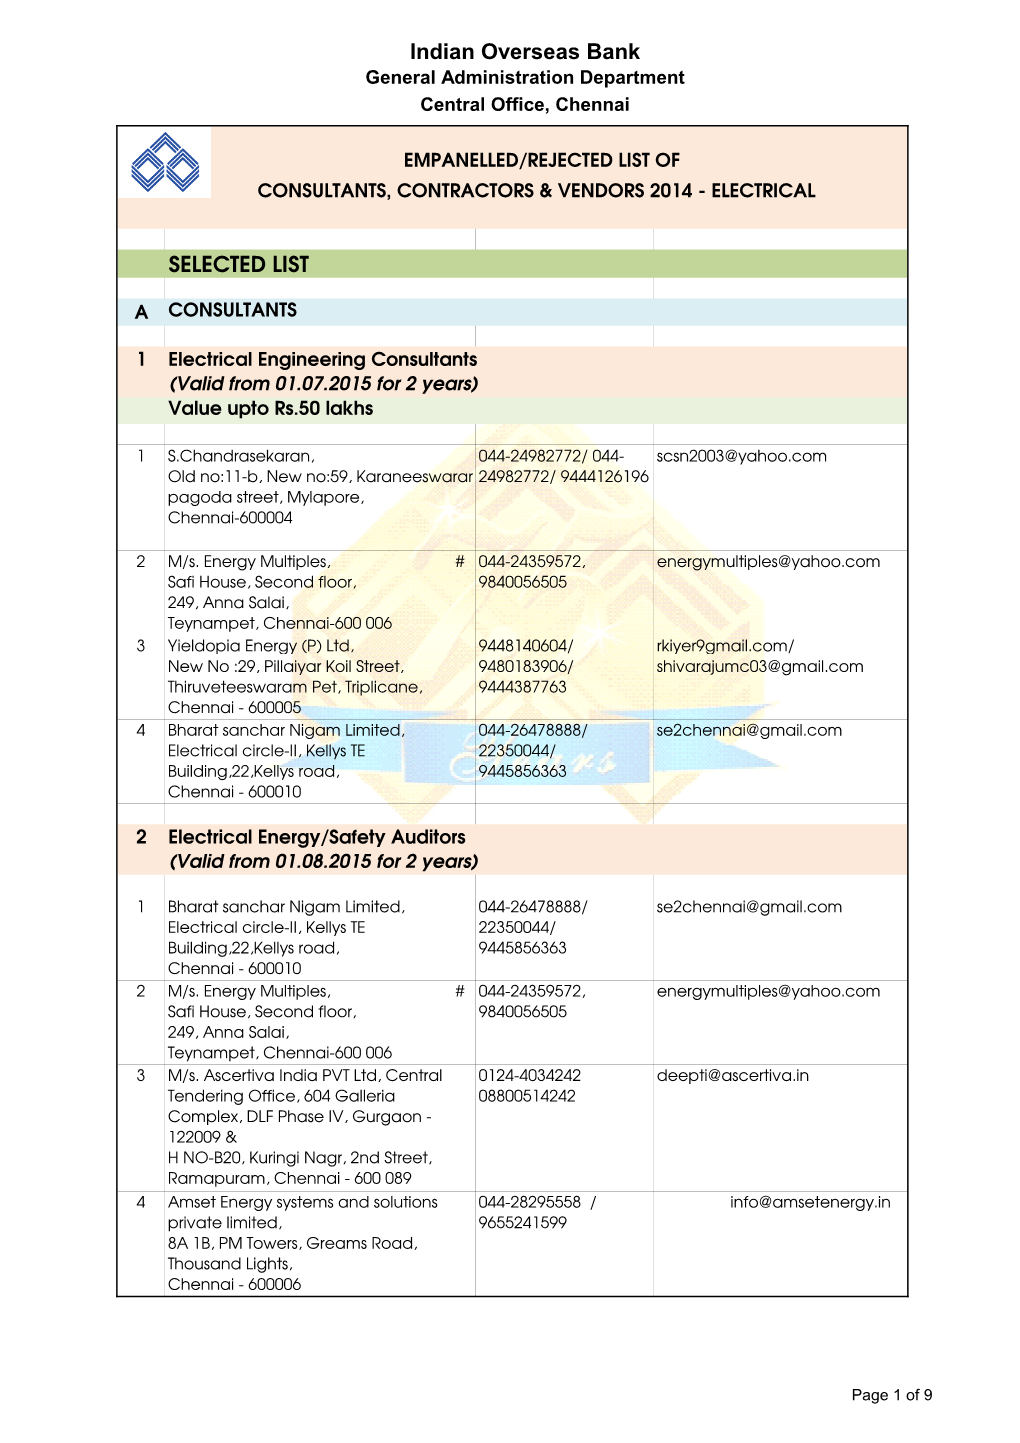 Empanelled/Rejected List of Consultants, Contractors & Vendors 2014